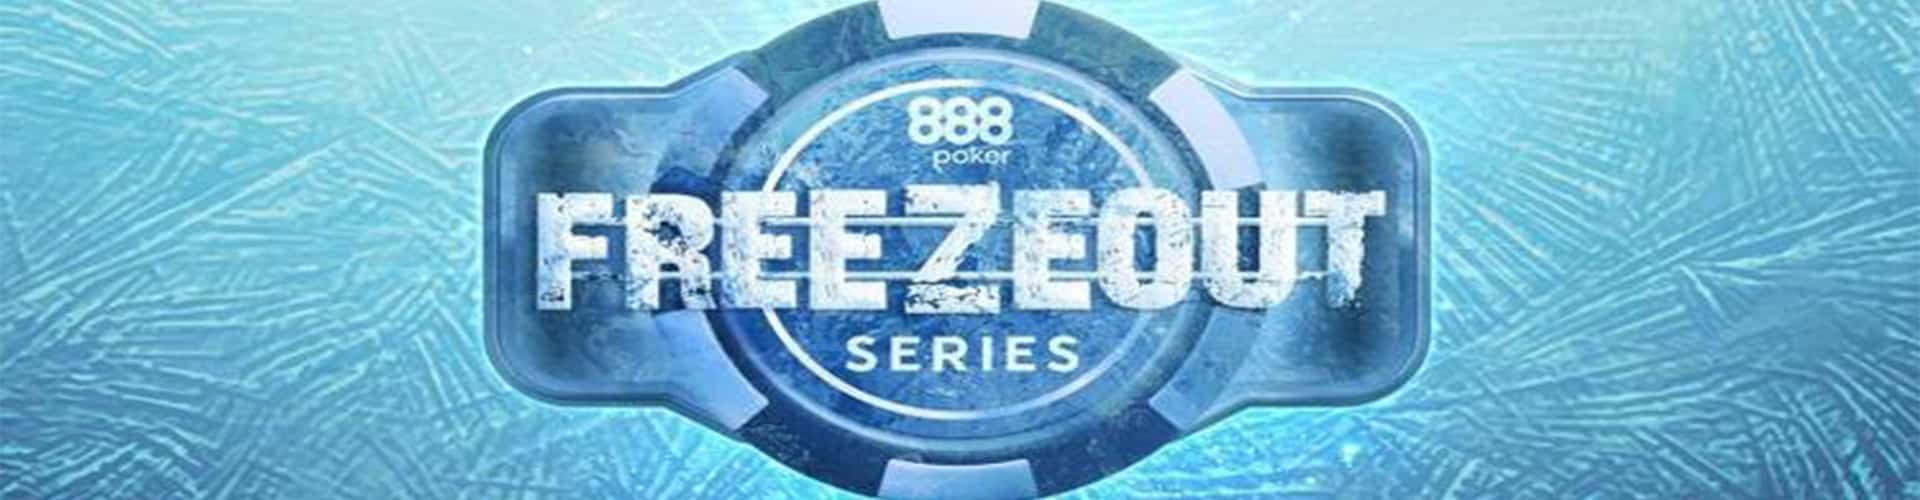 888 freezout series